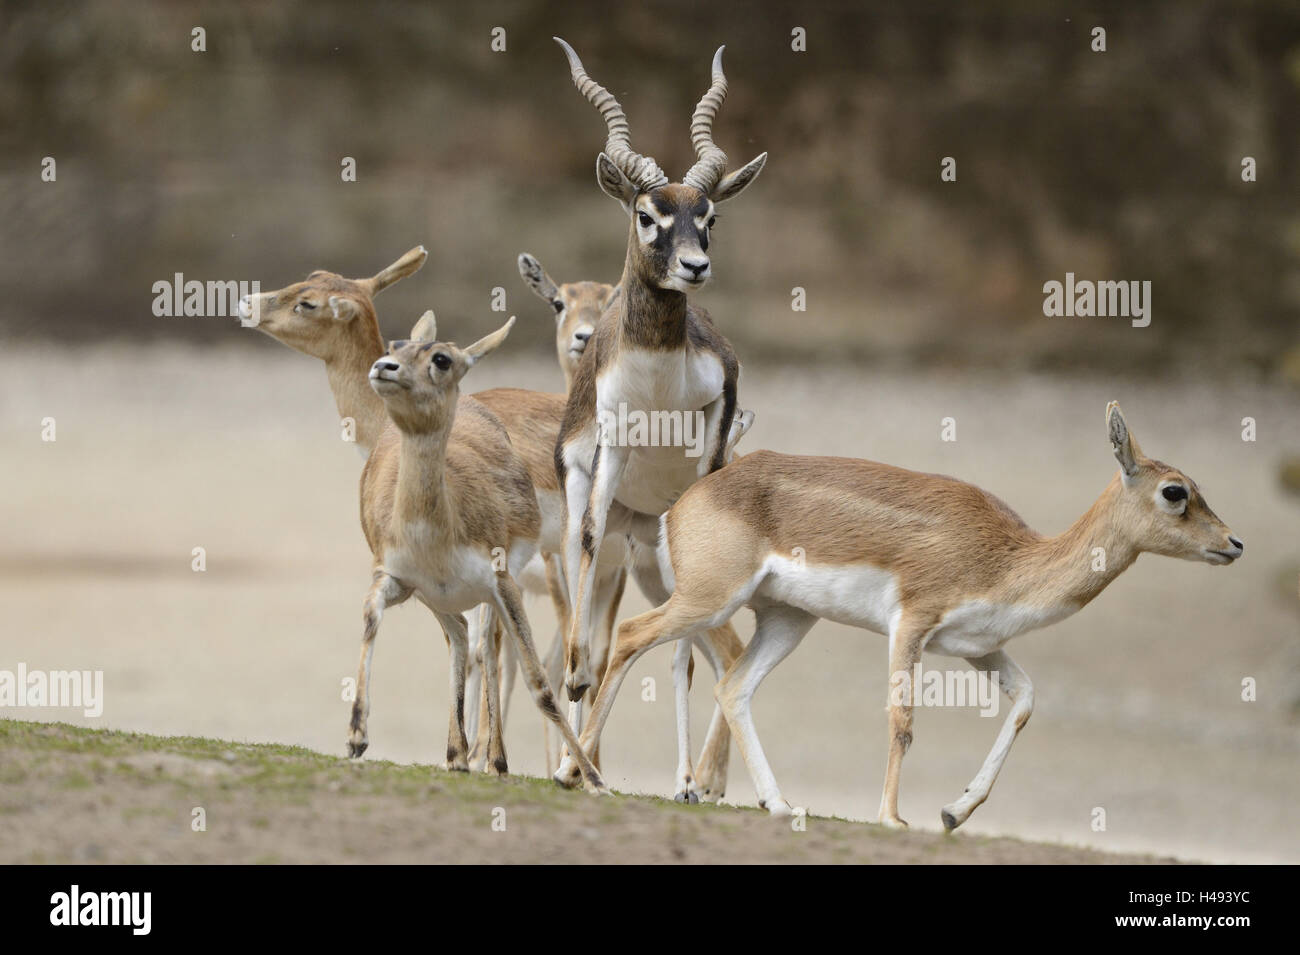 Blackbucks, Antilope cervicapra, front view, running, Stock Photo